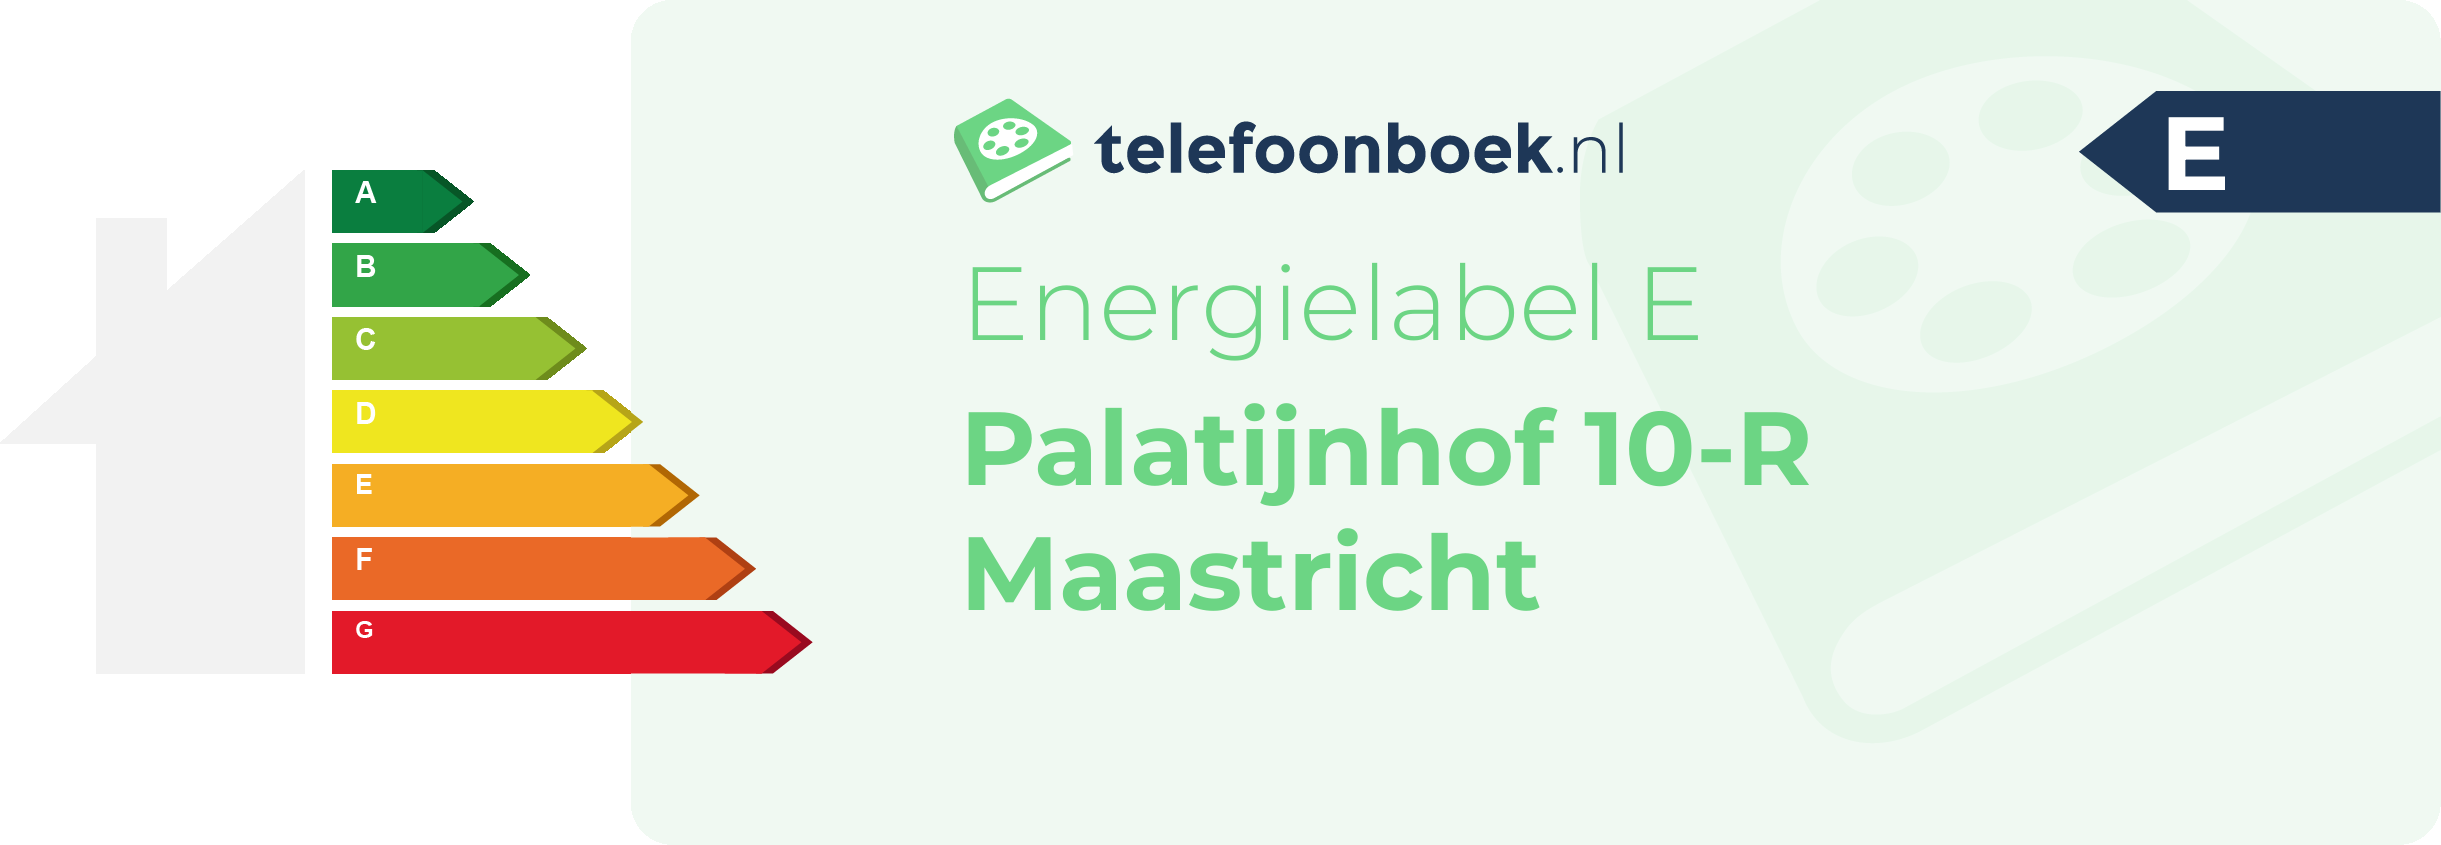 Energielabel Palatijnhof 10-R Maastricht